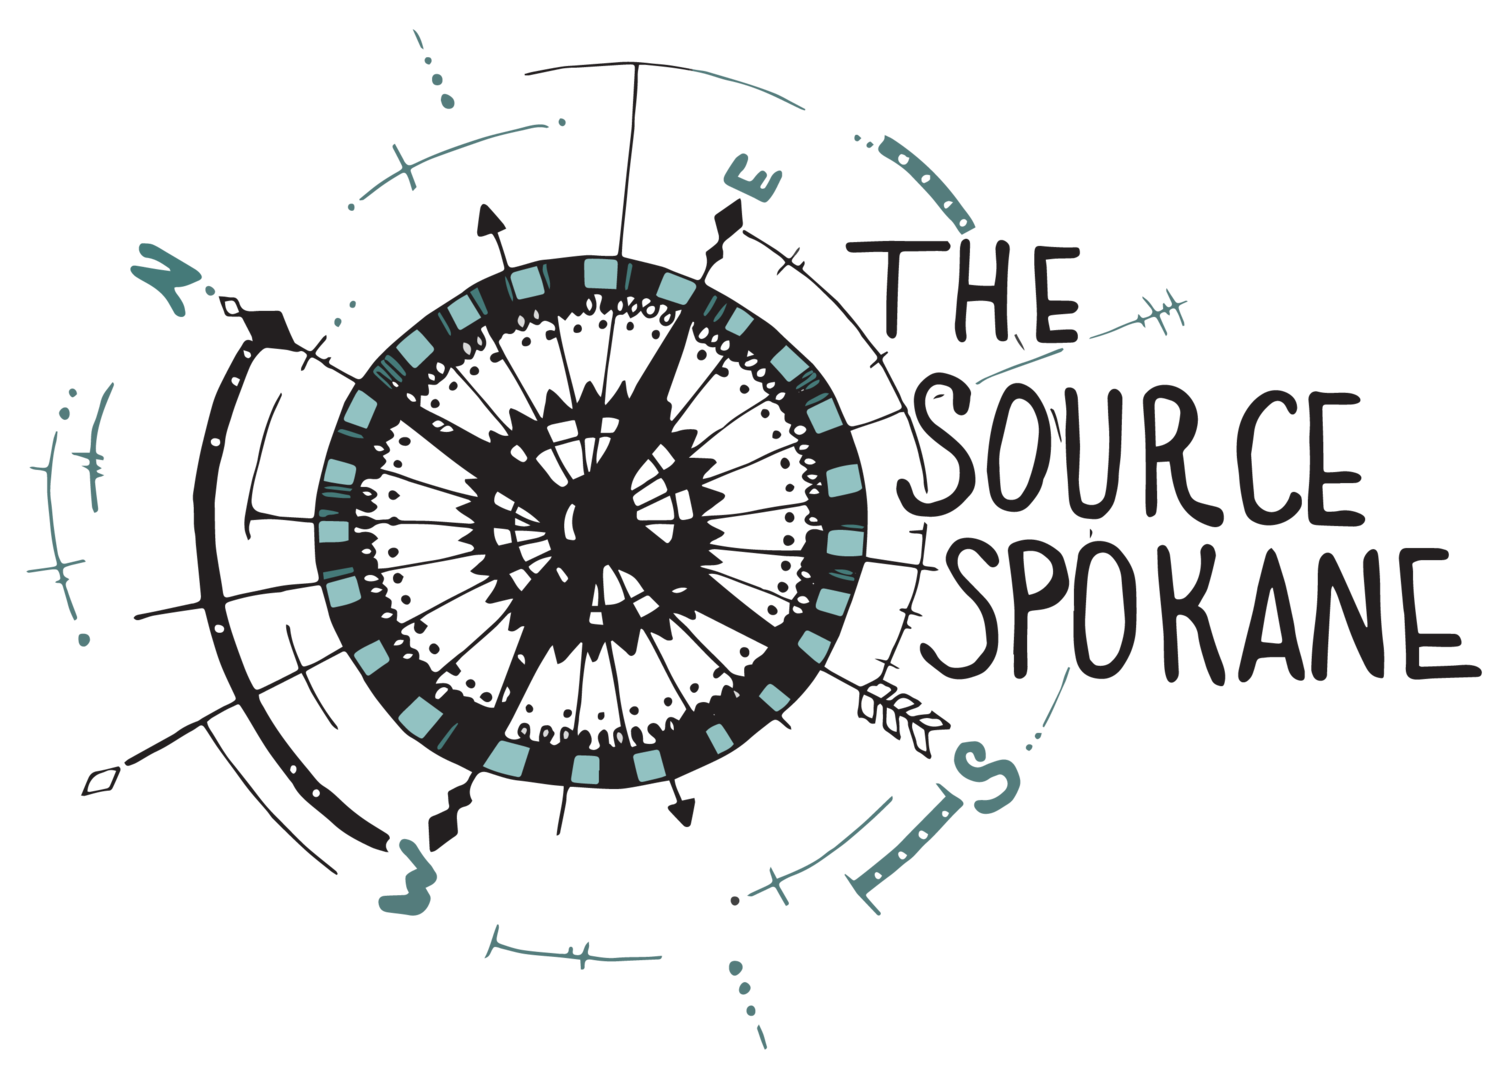 The Source Spokane